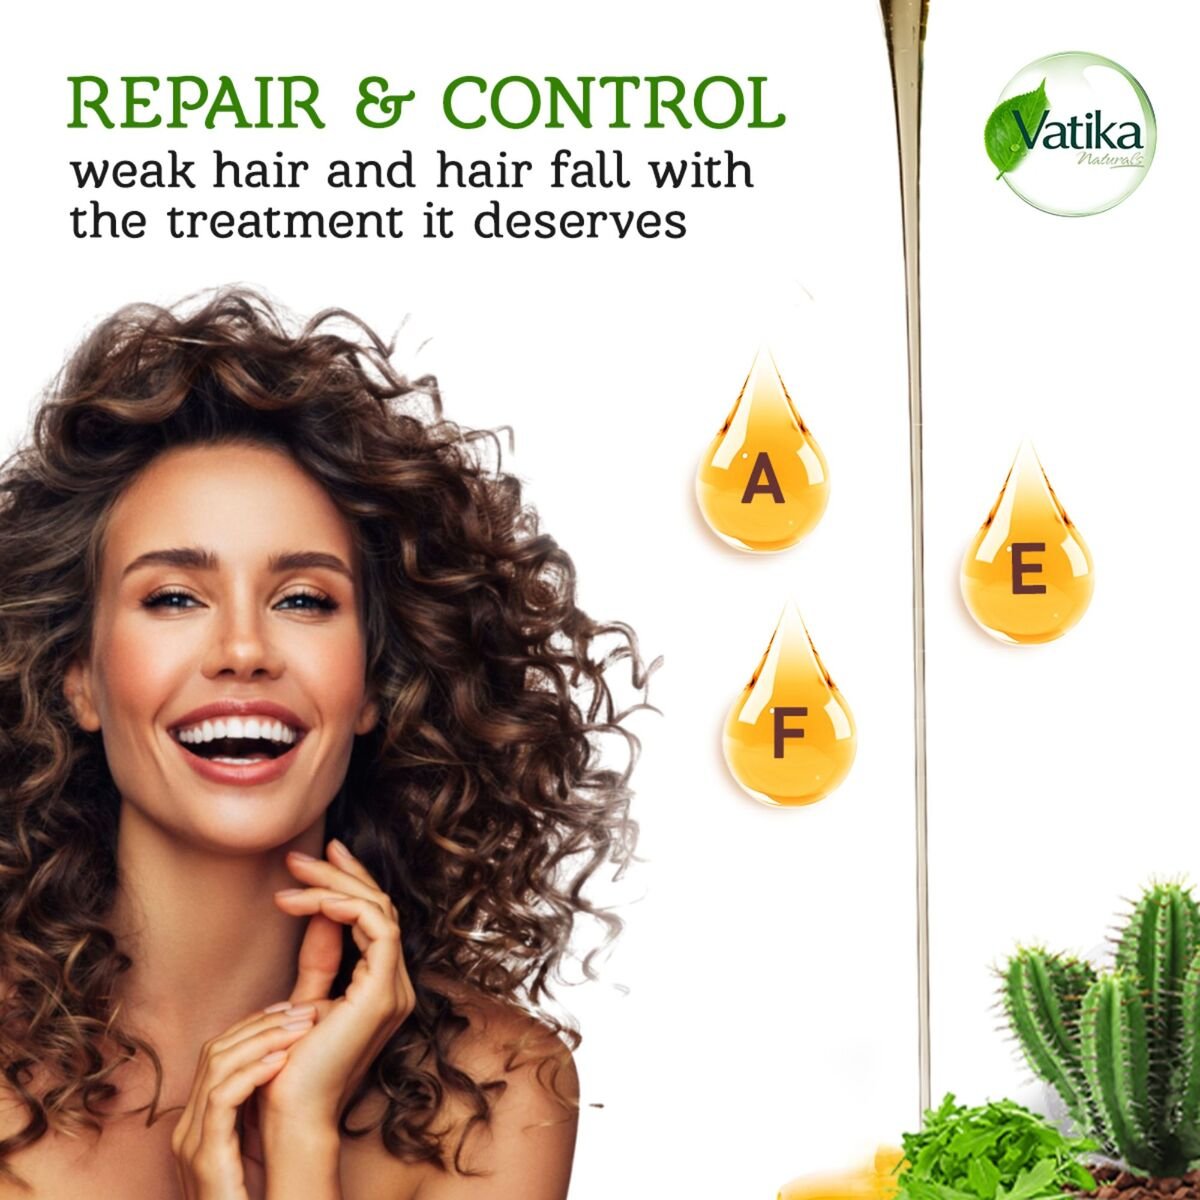 Vatika Naturals Hair Fall Control Oil Replacement For Weak Hair, Prone to Hair Fall 200 ml